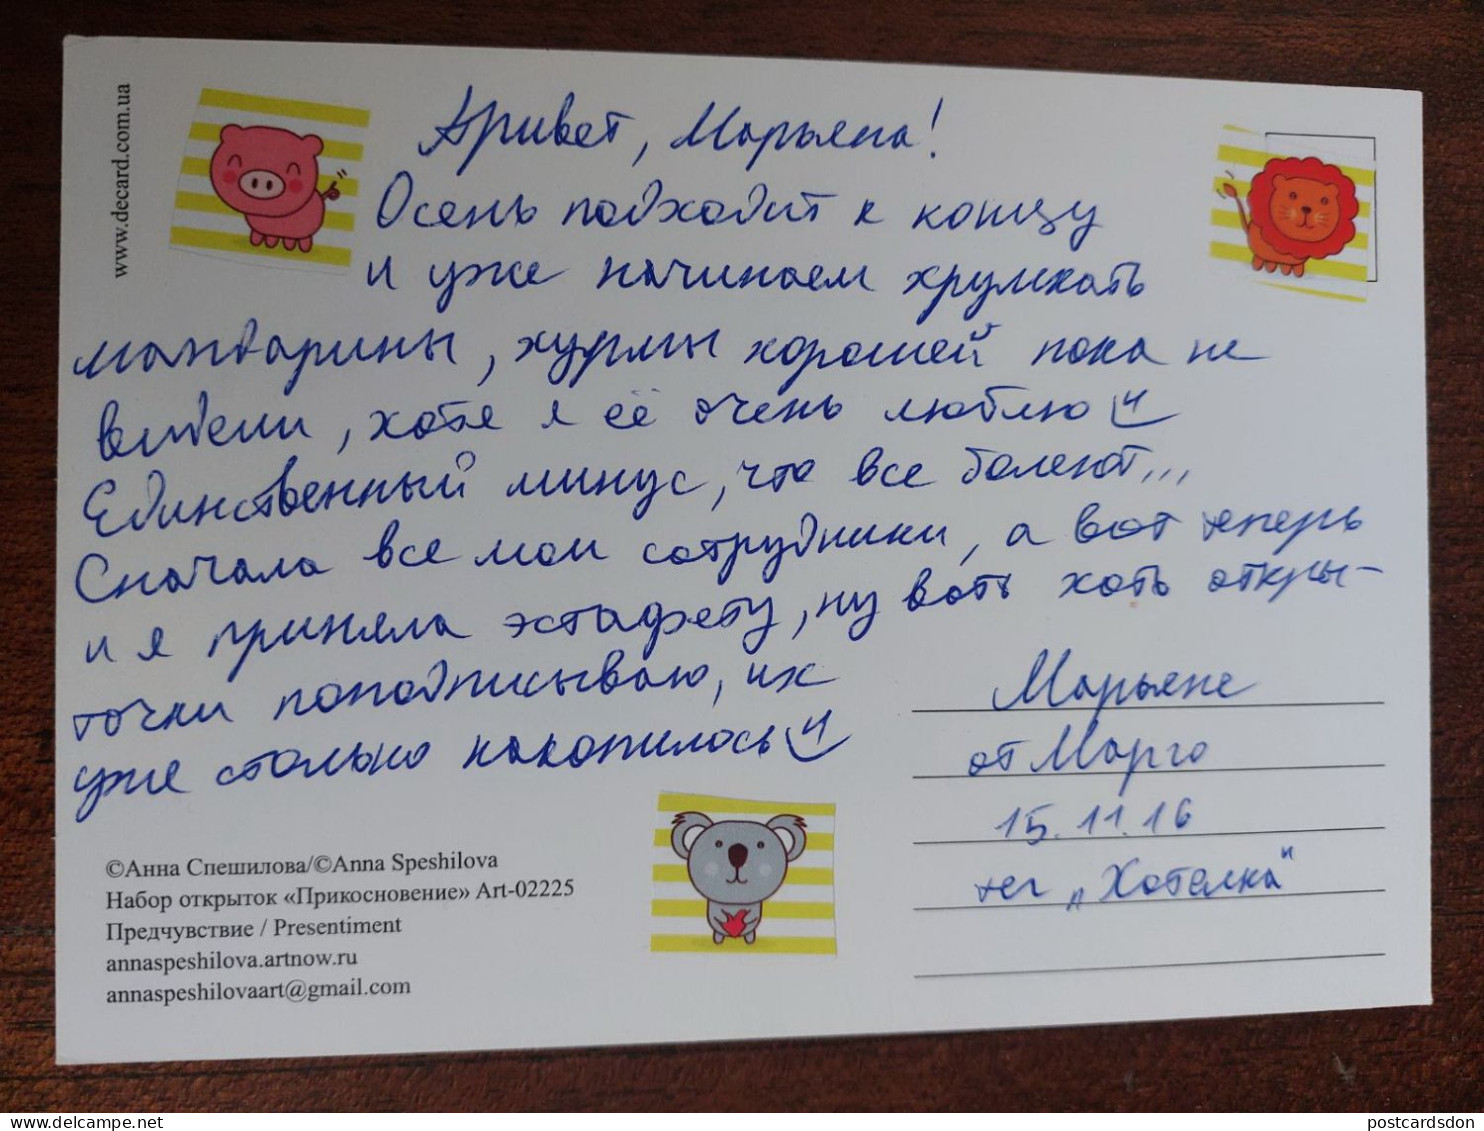 Illustrator Speshilova "Presentiment" - Modern Ukrainian Postcard - Postcrossing - 2010s / Seagull - Ukraine